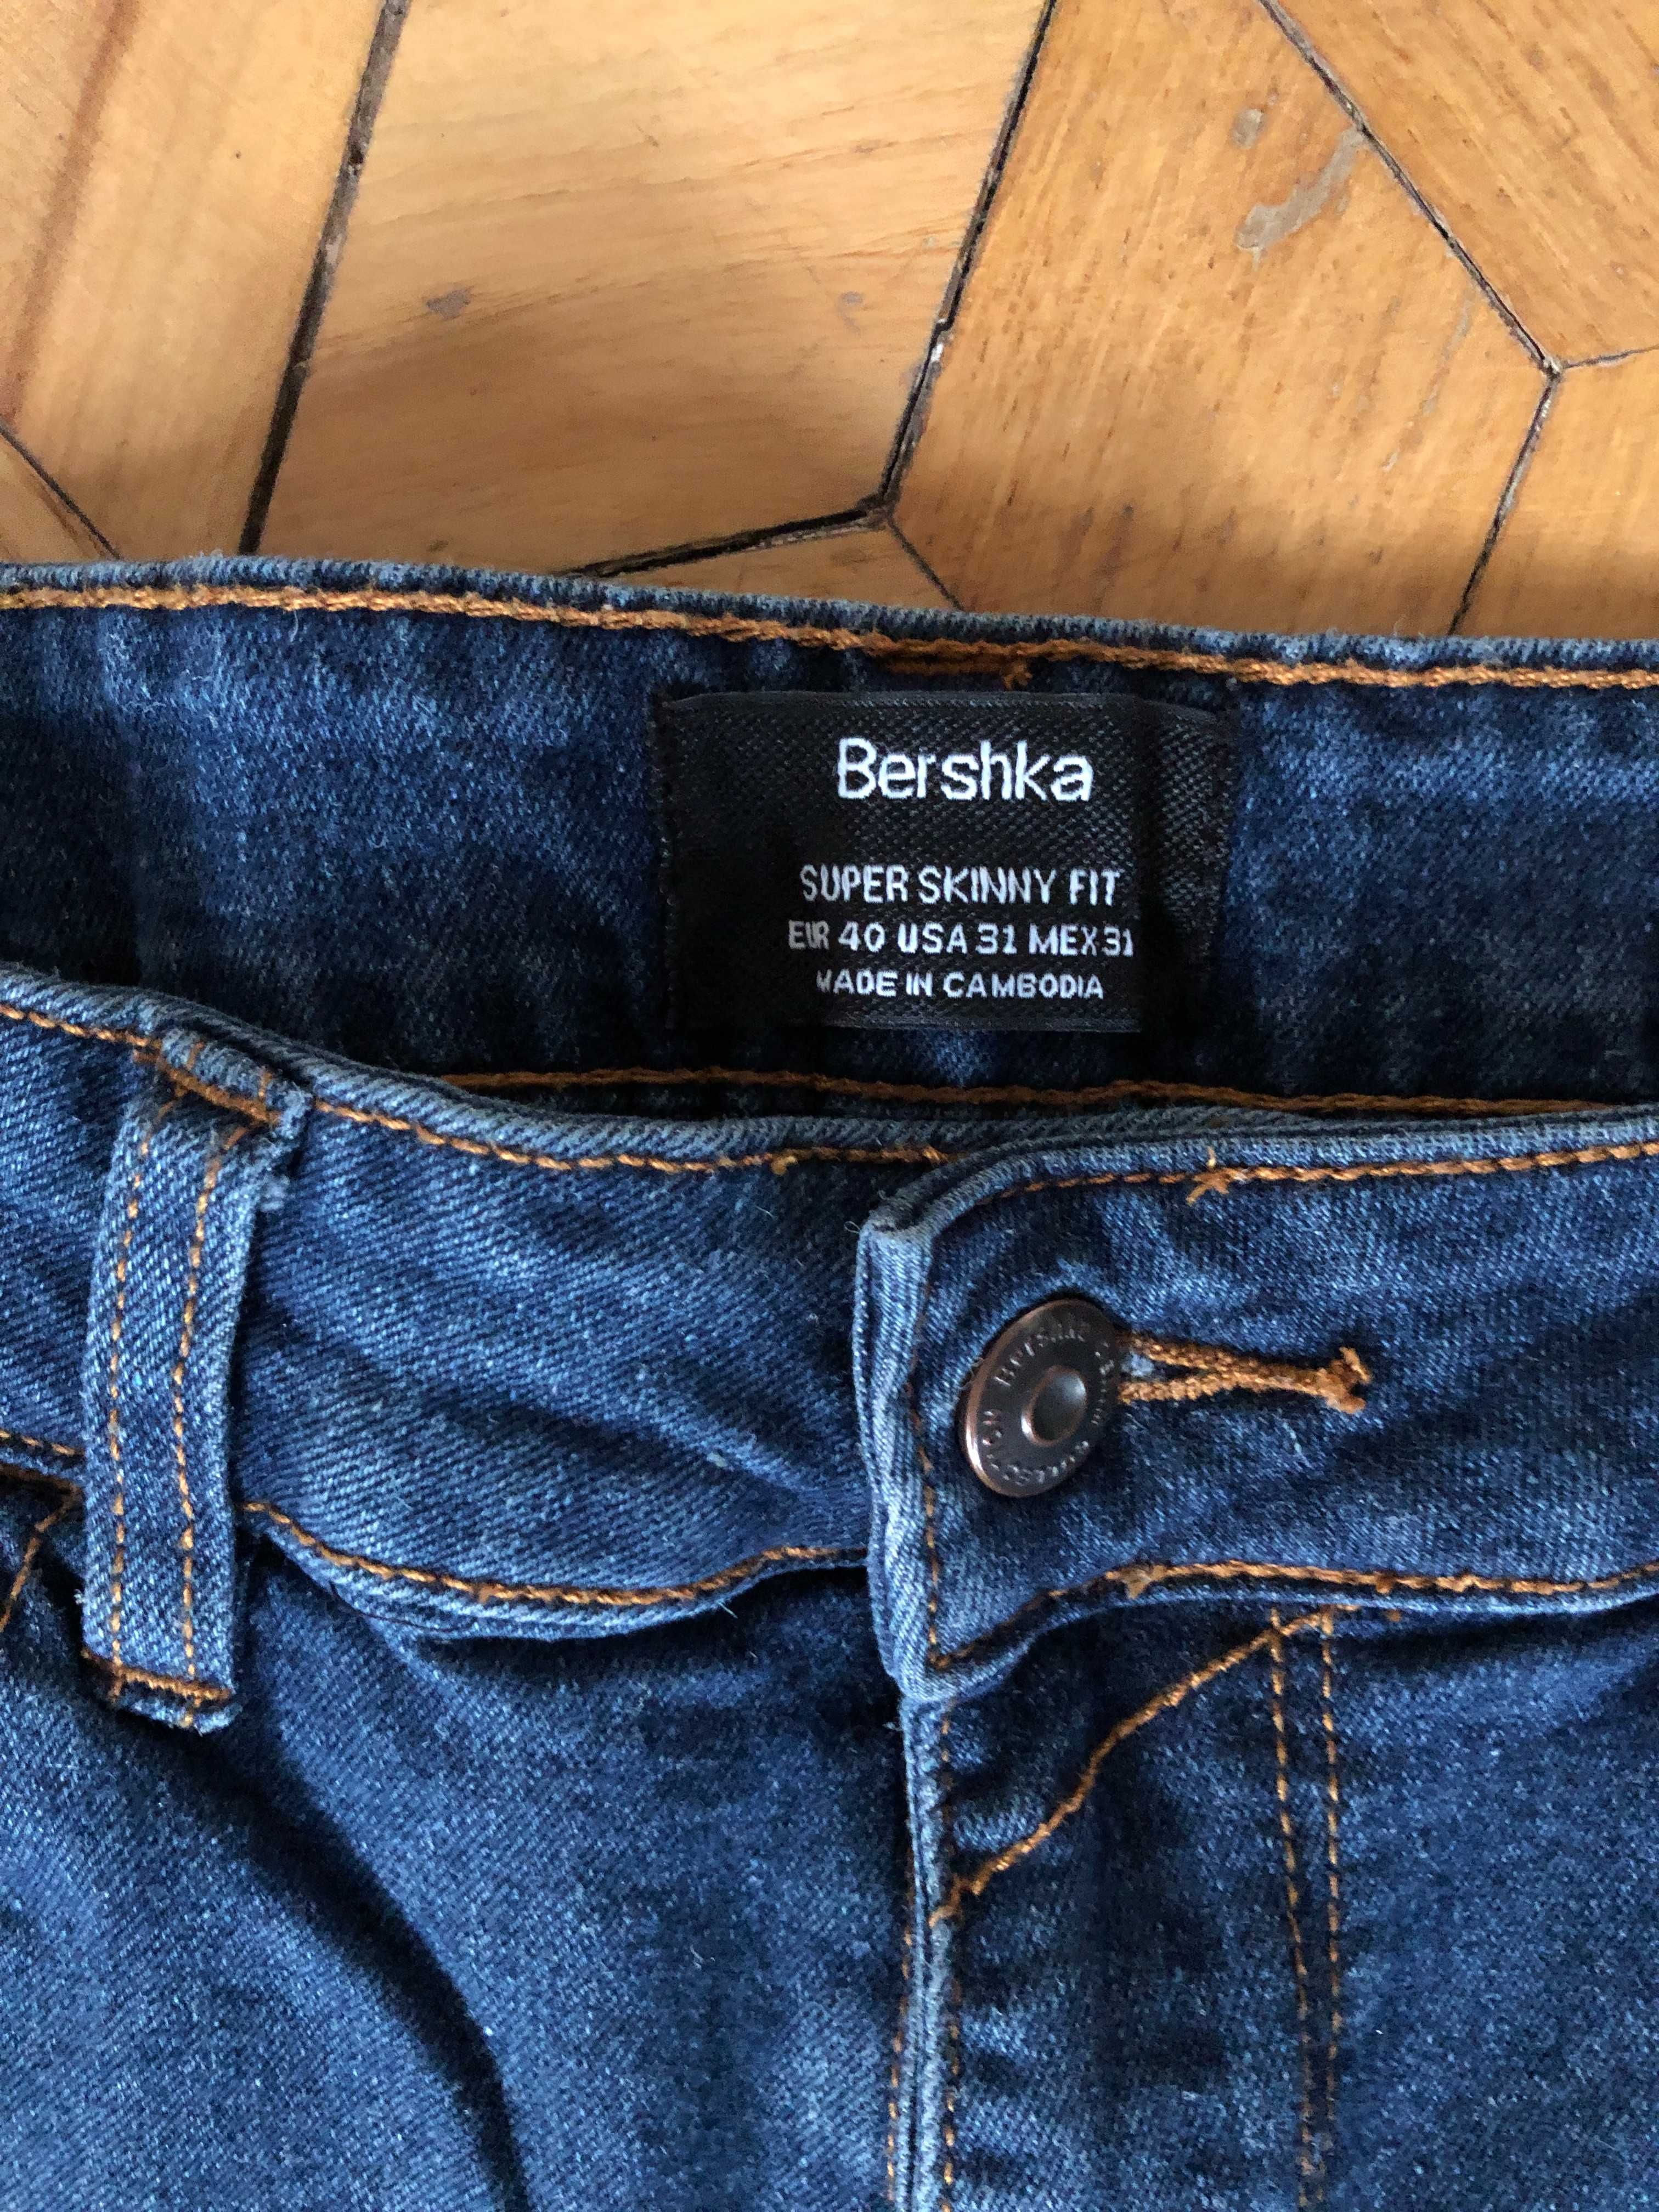 Spodnie jeansy Bershka super skinny fit 40